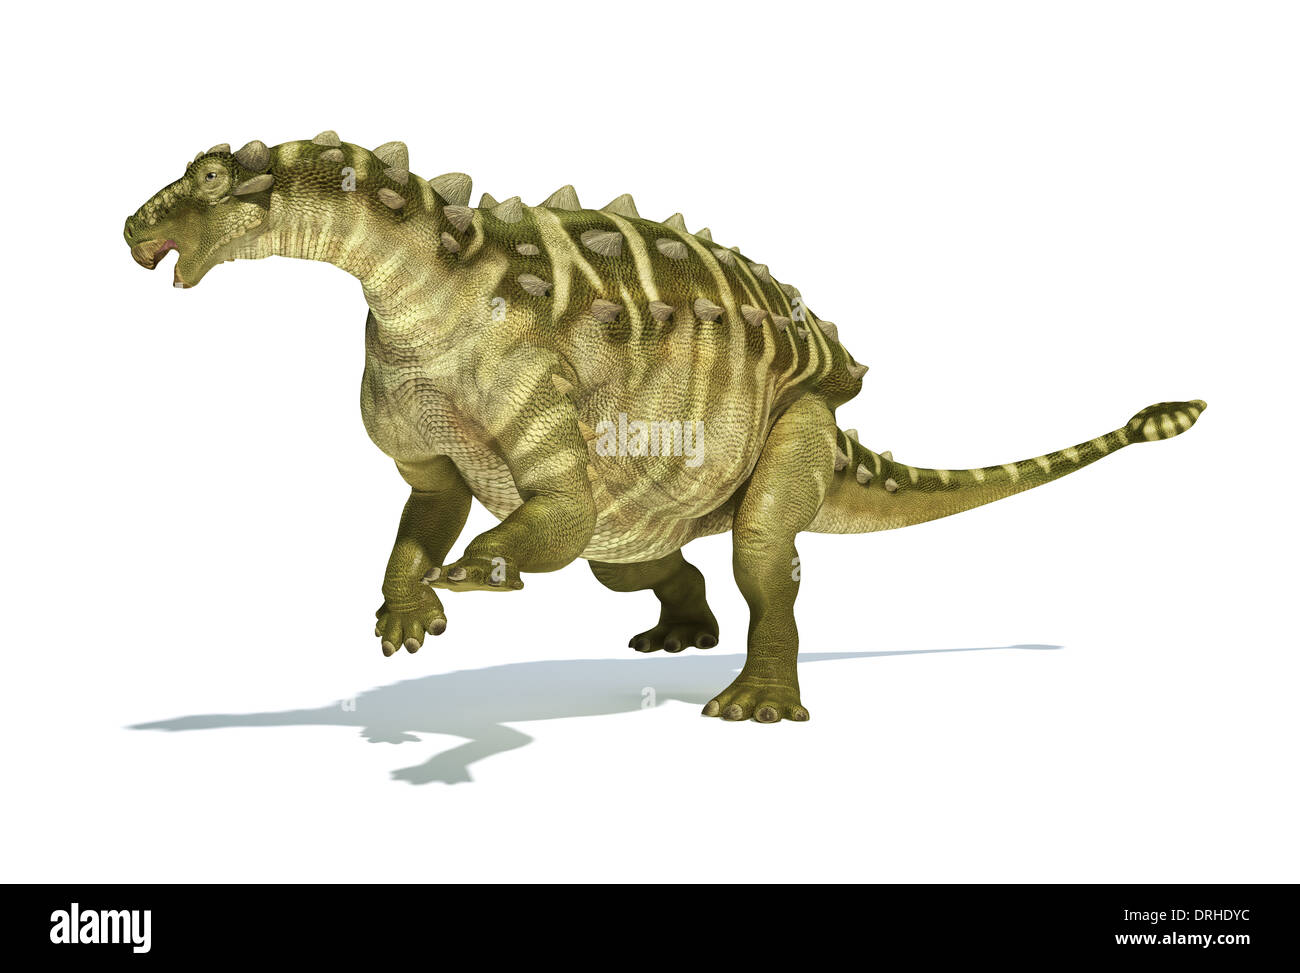 Talarurus dinosaur, photo-realistic, scientifically correct representation. Dynamic view. On white background with drop shadow. Stock Photo